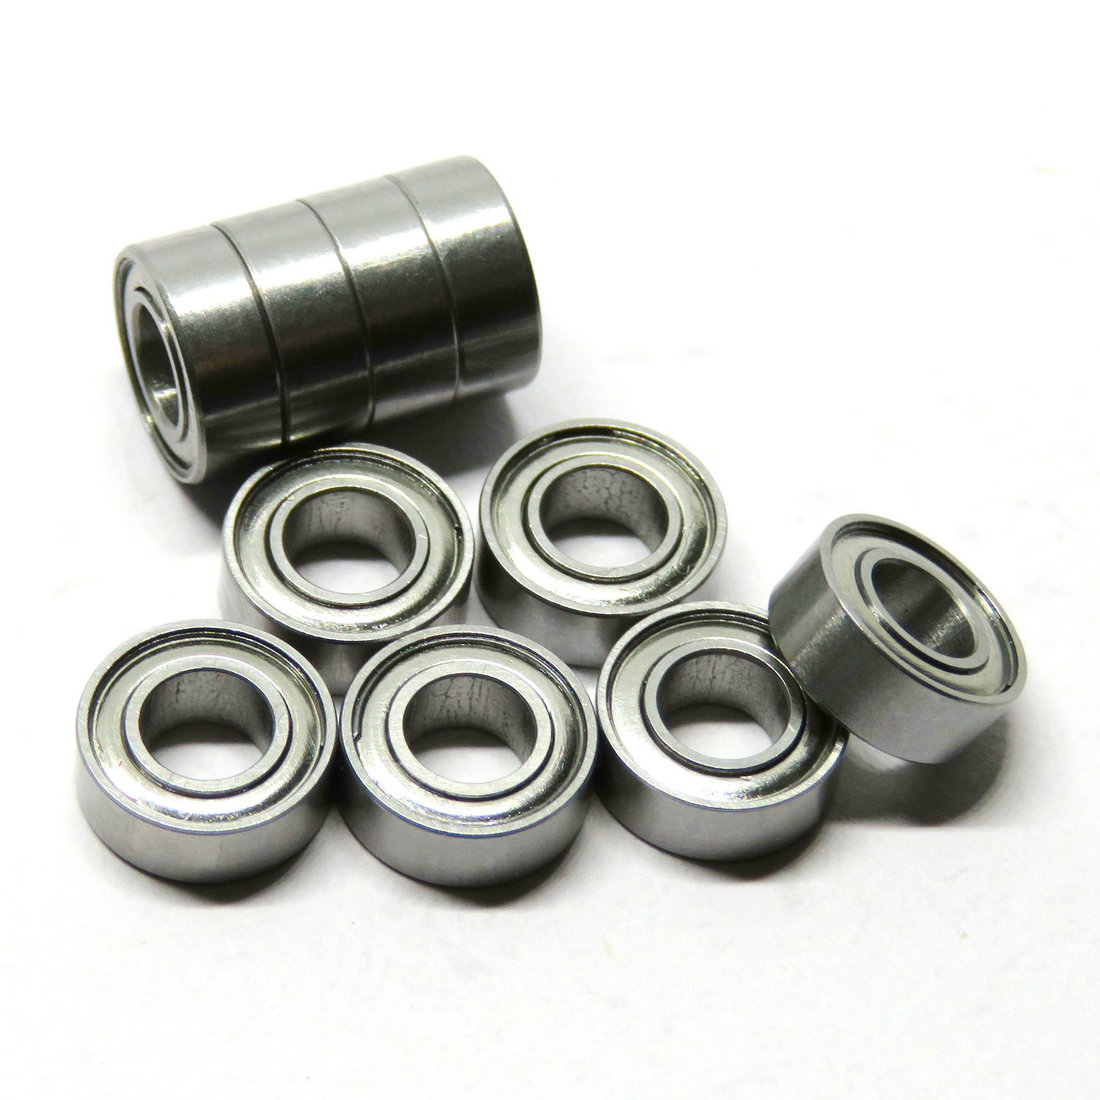 MR84 ZZ Miniature ball bearing MR84-ZZ 4x8x3mm MR84-2Z MR84 2Z MR84ZZMR84 ZZ Miniature ball bearing MR84-ZZ 4x8x3mm MR84-2Z MR84 2Z MR84ZZ.jpg